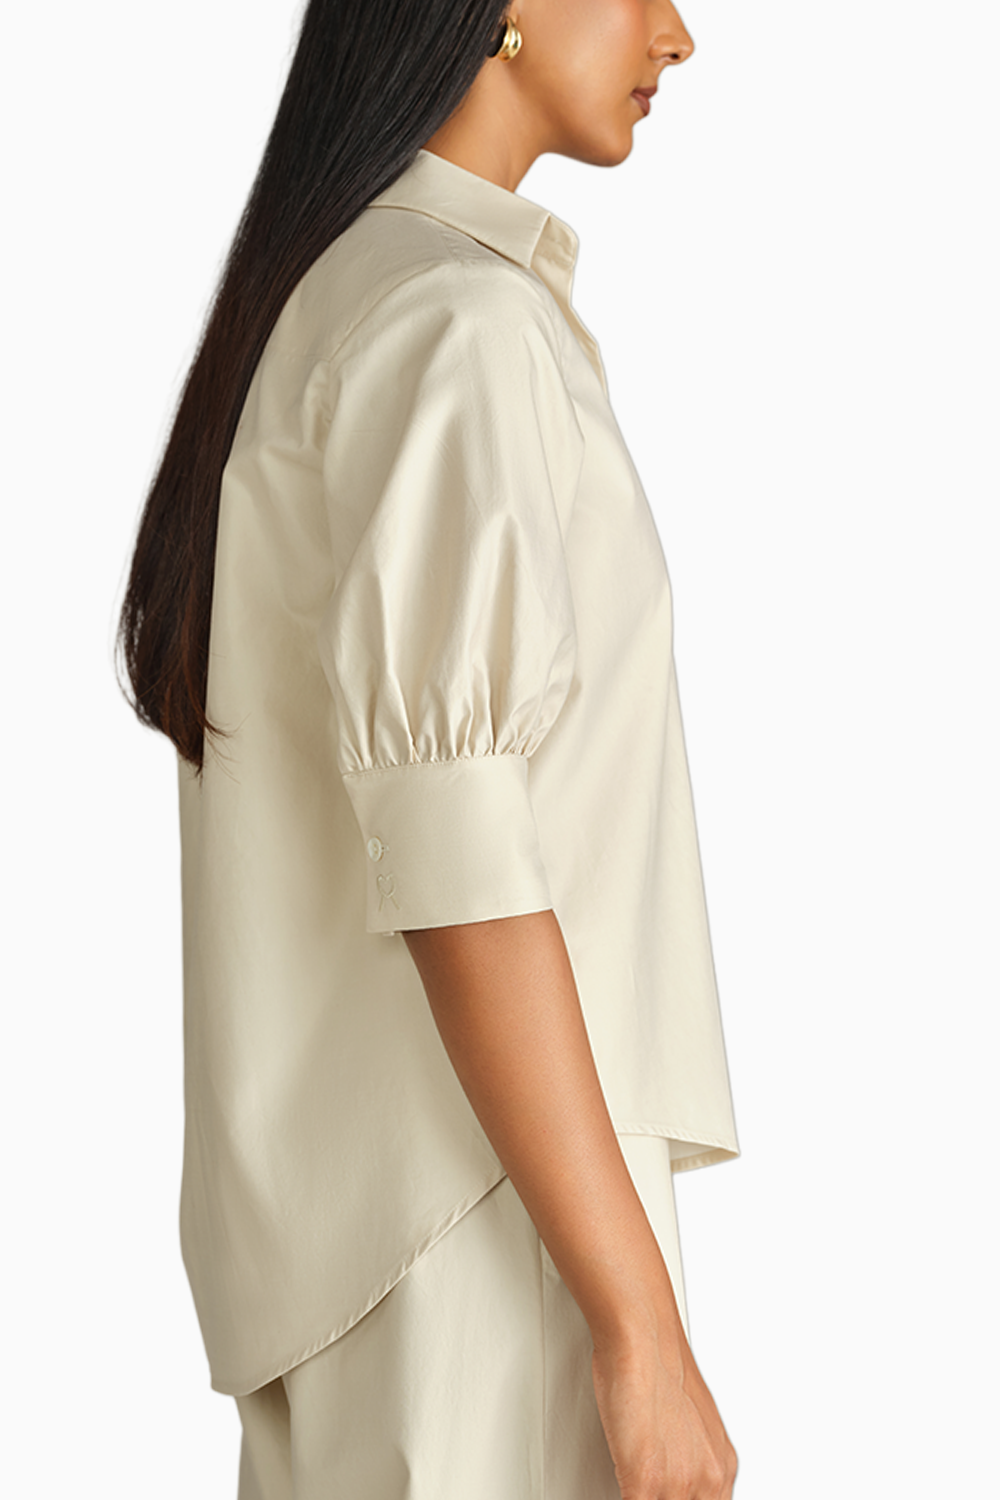 Fawn Egyptian Cotton Short-Sleeved Shirt